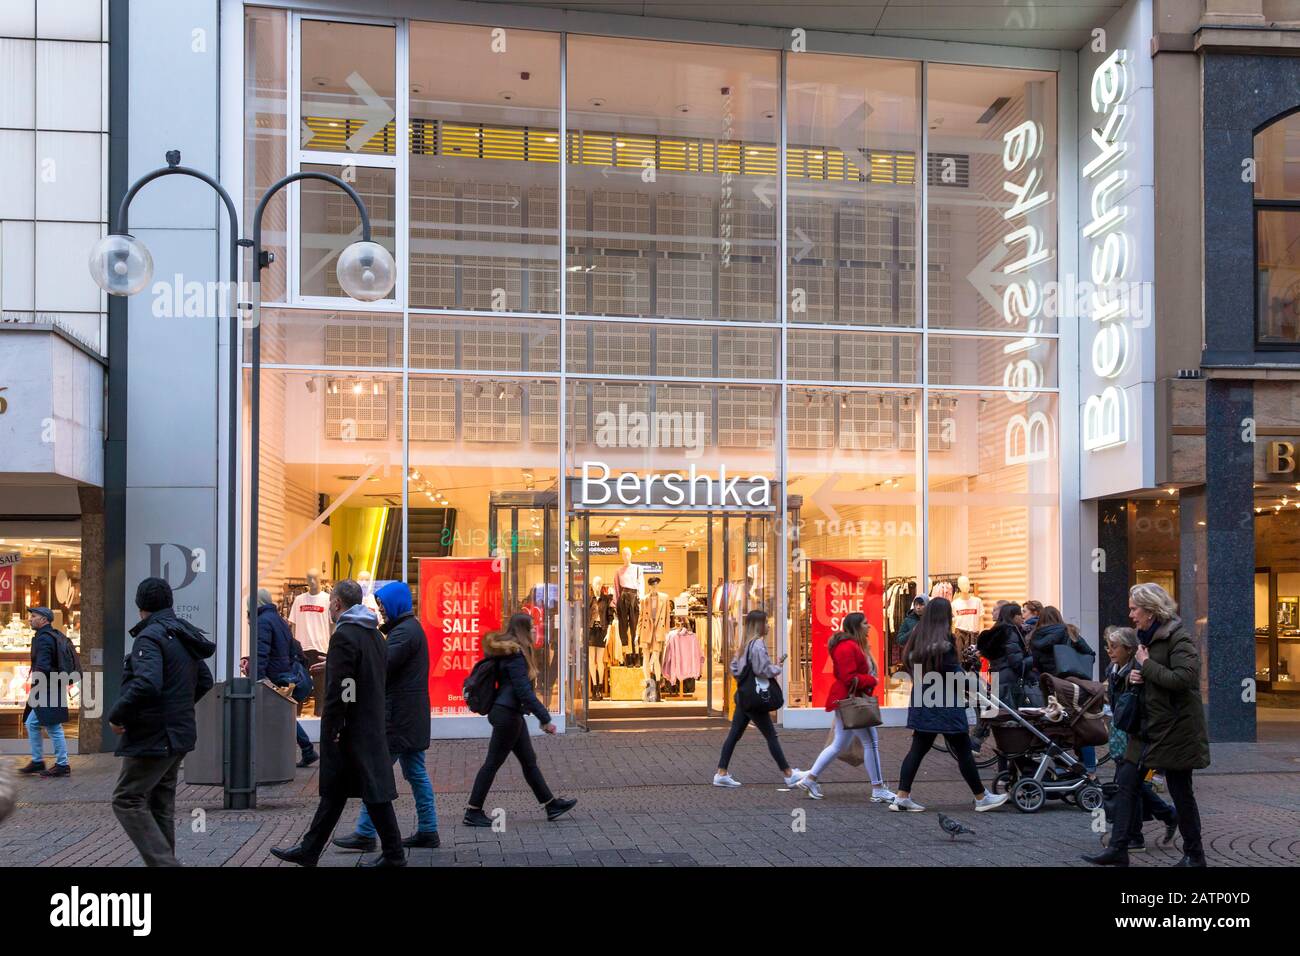 Negozio di moda Bershka sulla via dello shopping Schildergasse, Colonia,  Germania. Modegeschaeft Bershka In Der Einkaufsstrasse Schildergasse,  Koeln, Deutschl Foto stock - Alamy